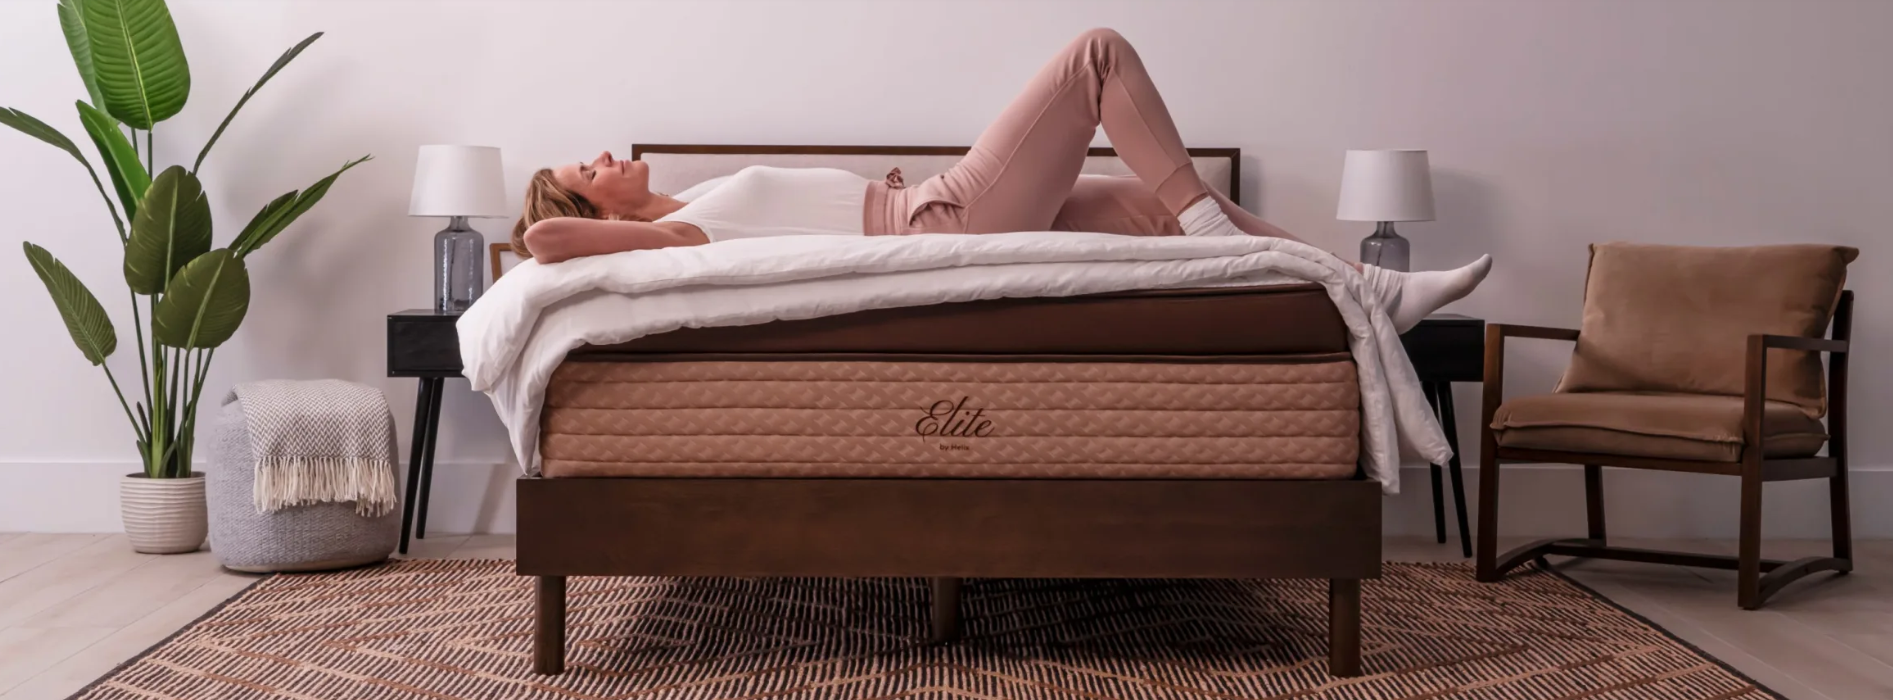 helix elite mattress store houston dusk